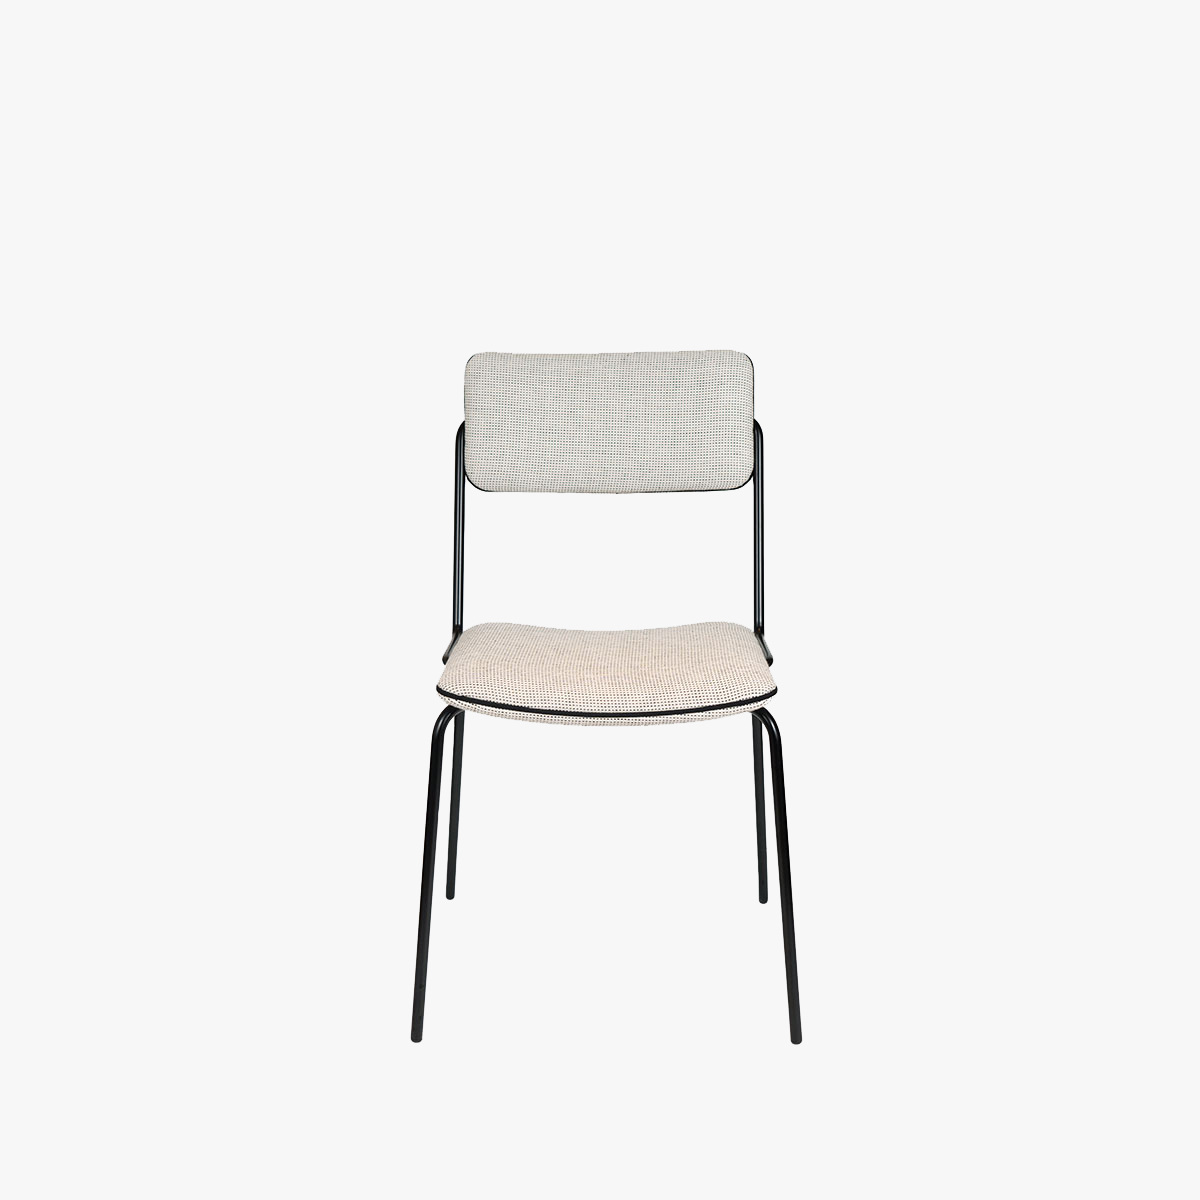 Chair Double Jeu, Dandy - H85 x W51 x D43 cm - Dandy tissue / Steel - image 3